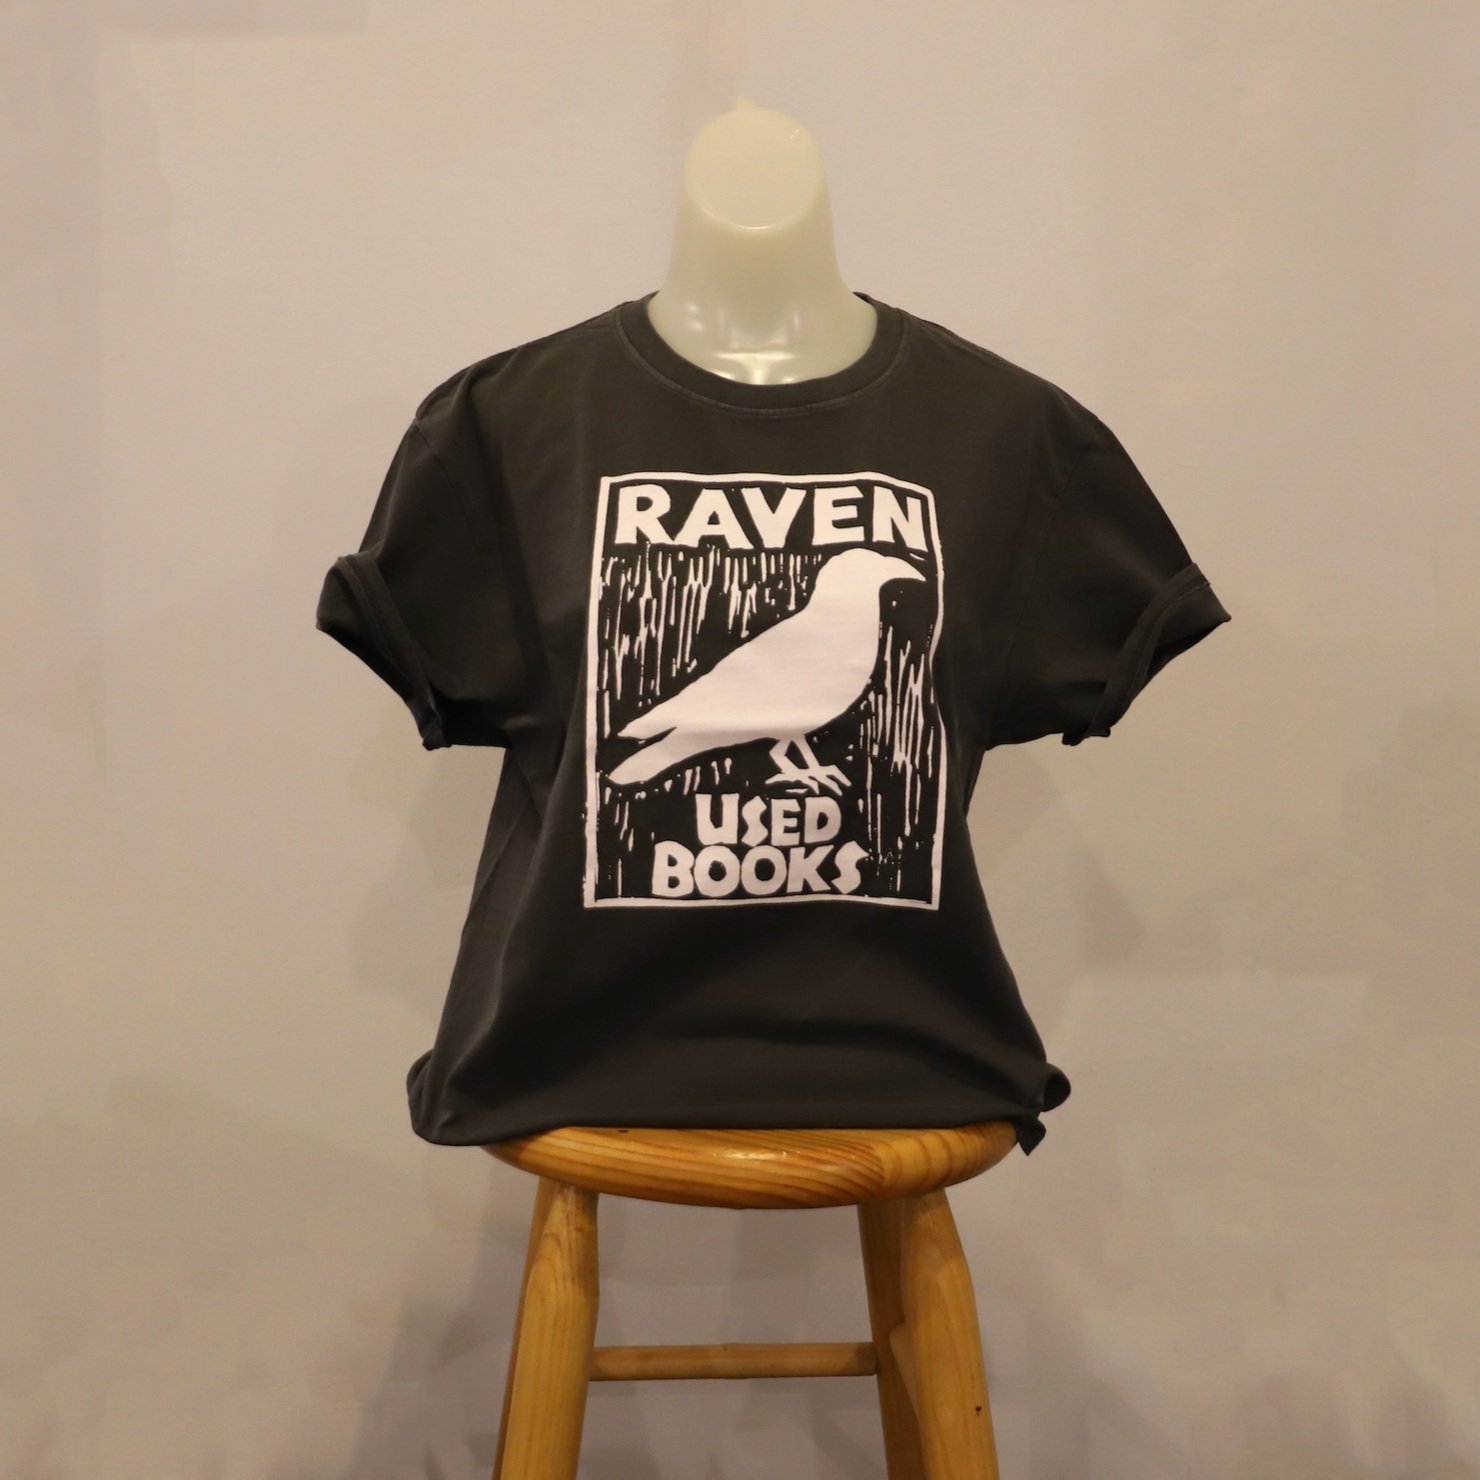 Raven Used Books T-Shirt — Raven Used Books